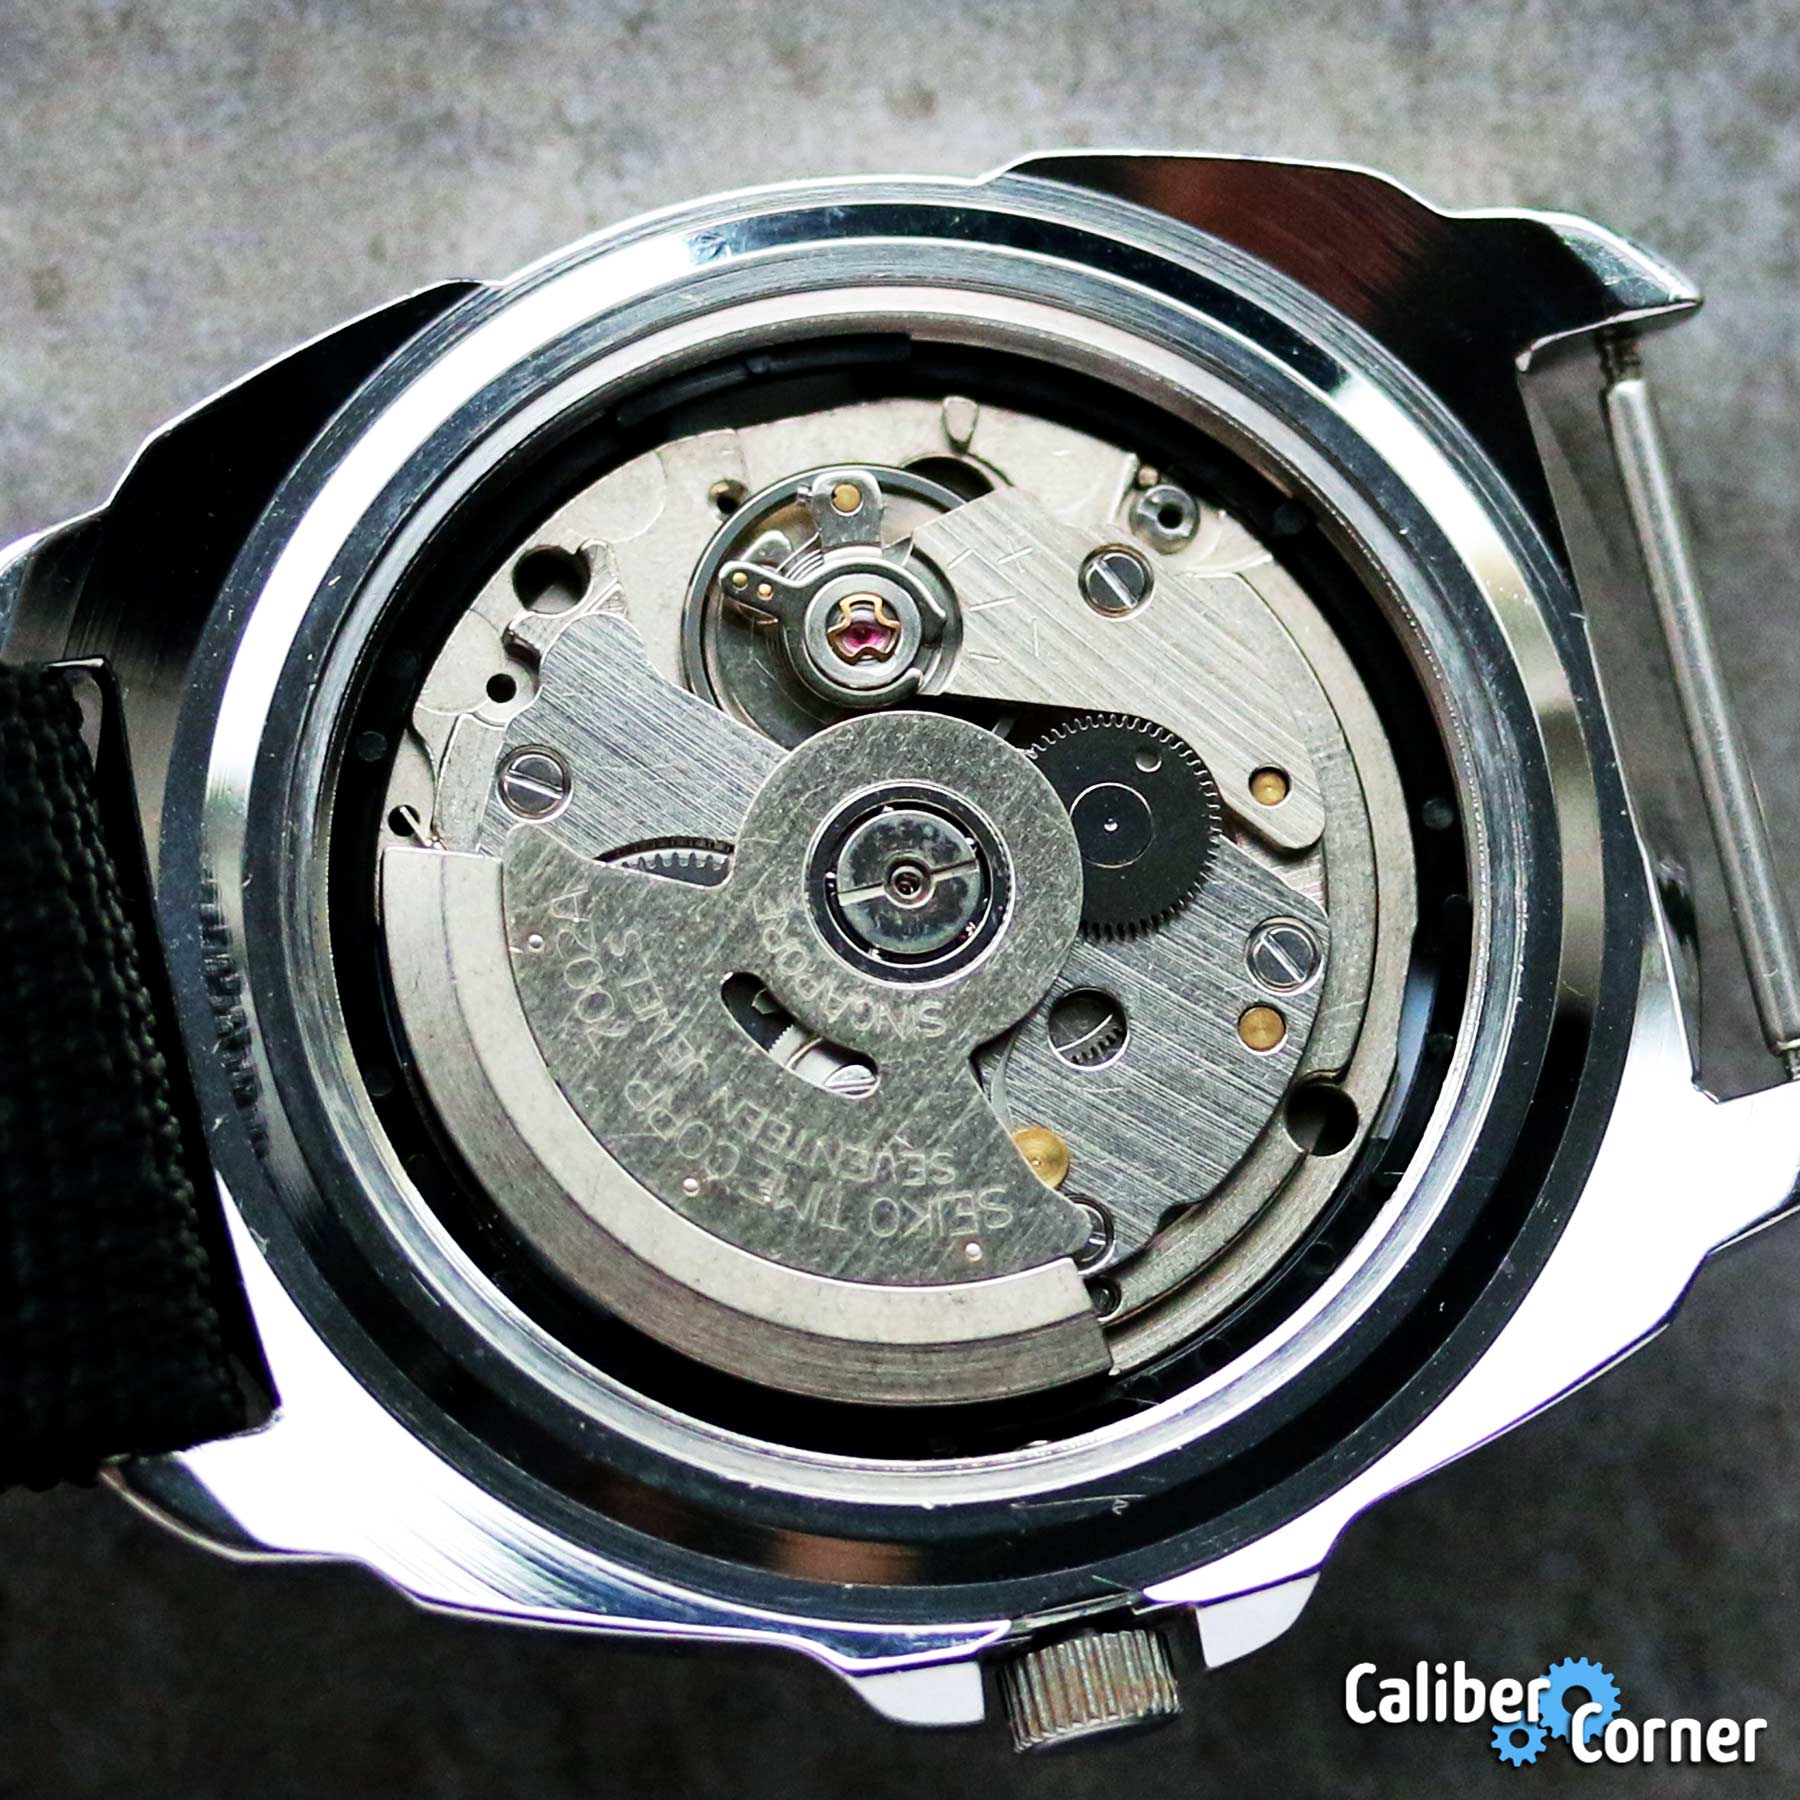 Seiko Caliber 7002a Watch Example